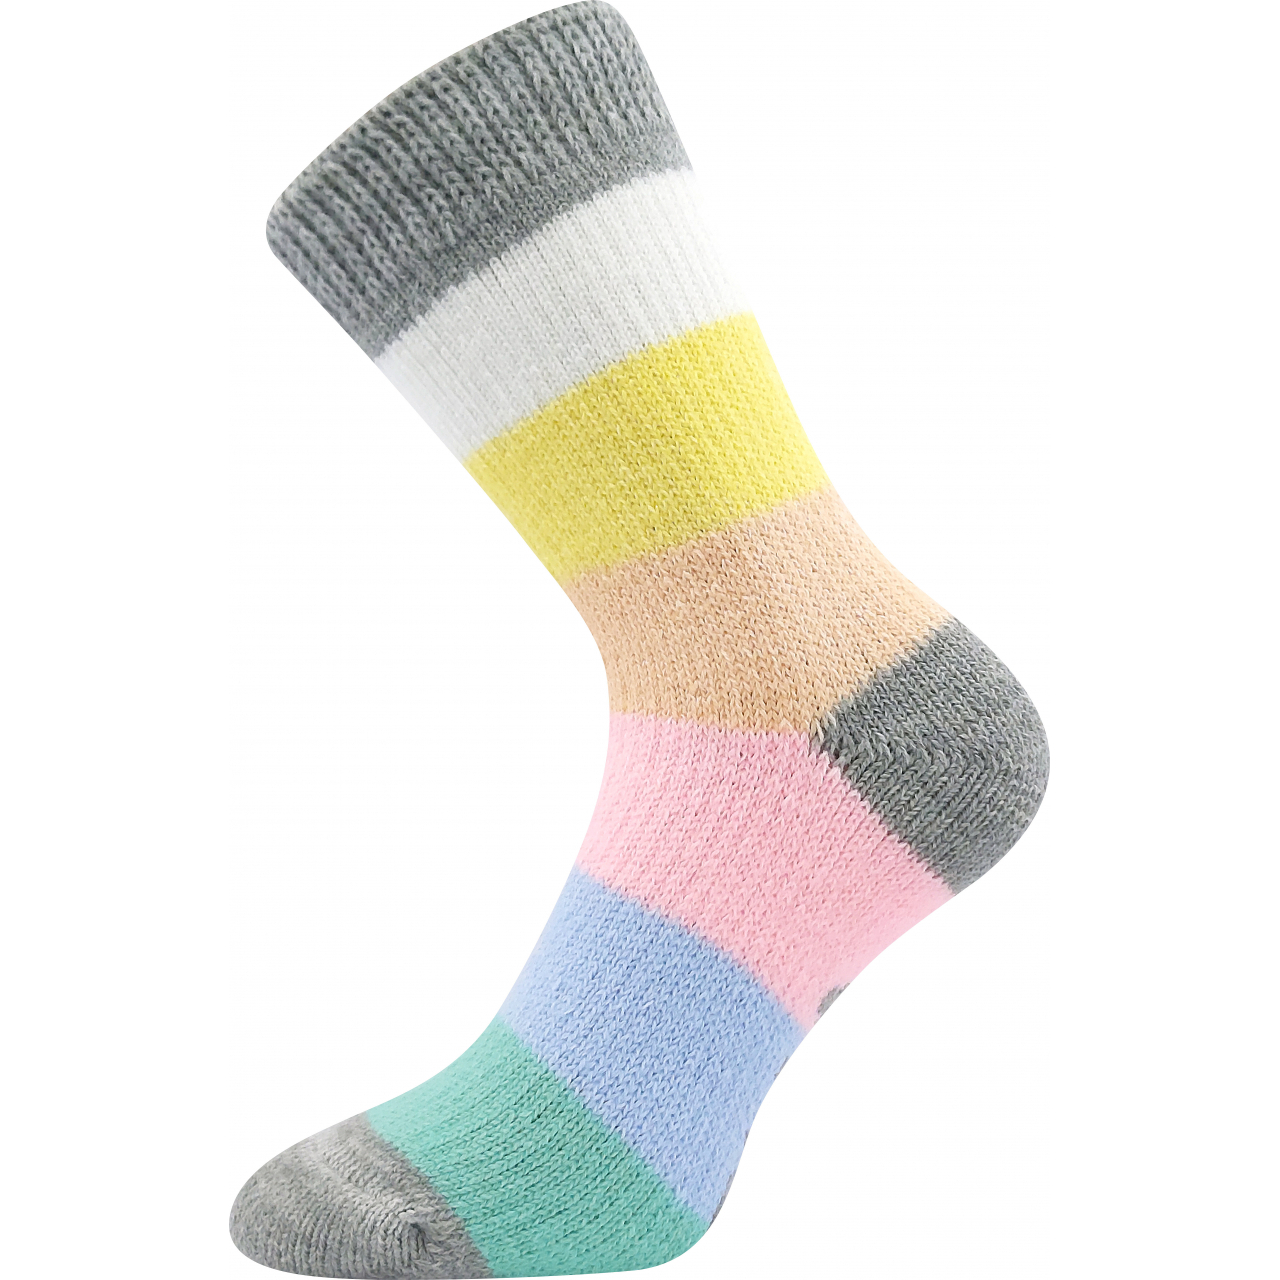 Ponožky spací unisex Boma Spací Pruh - barevné, 35-38